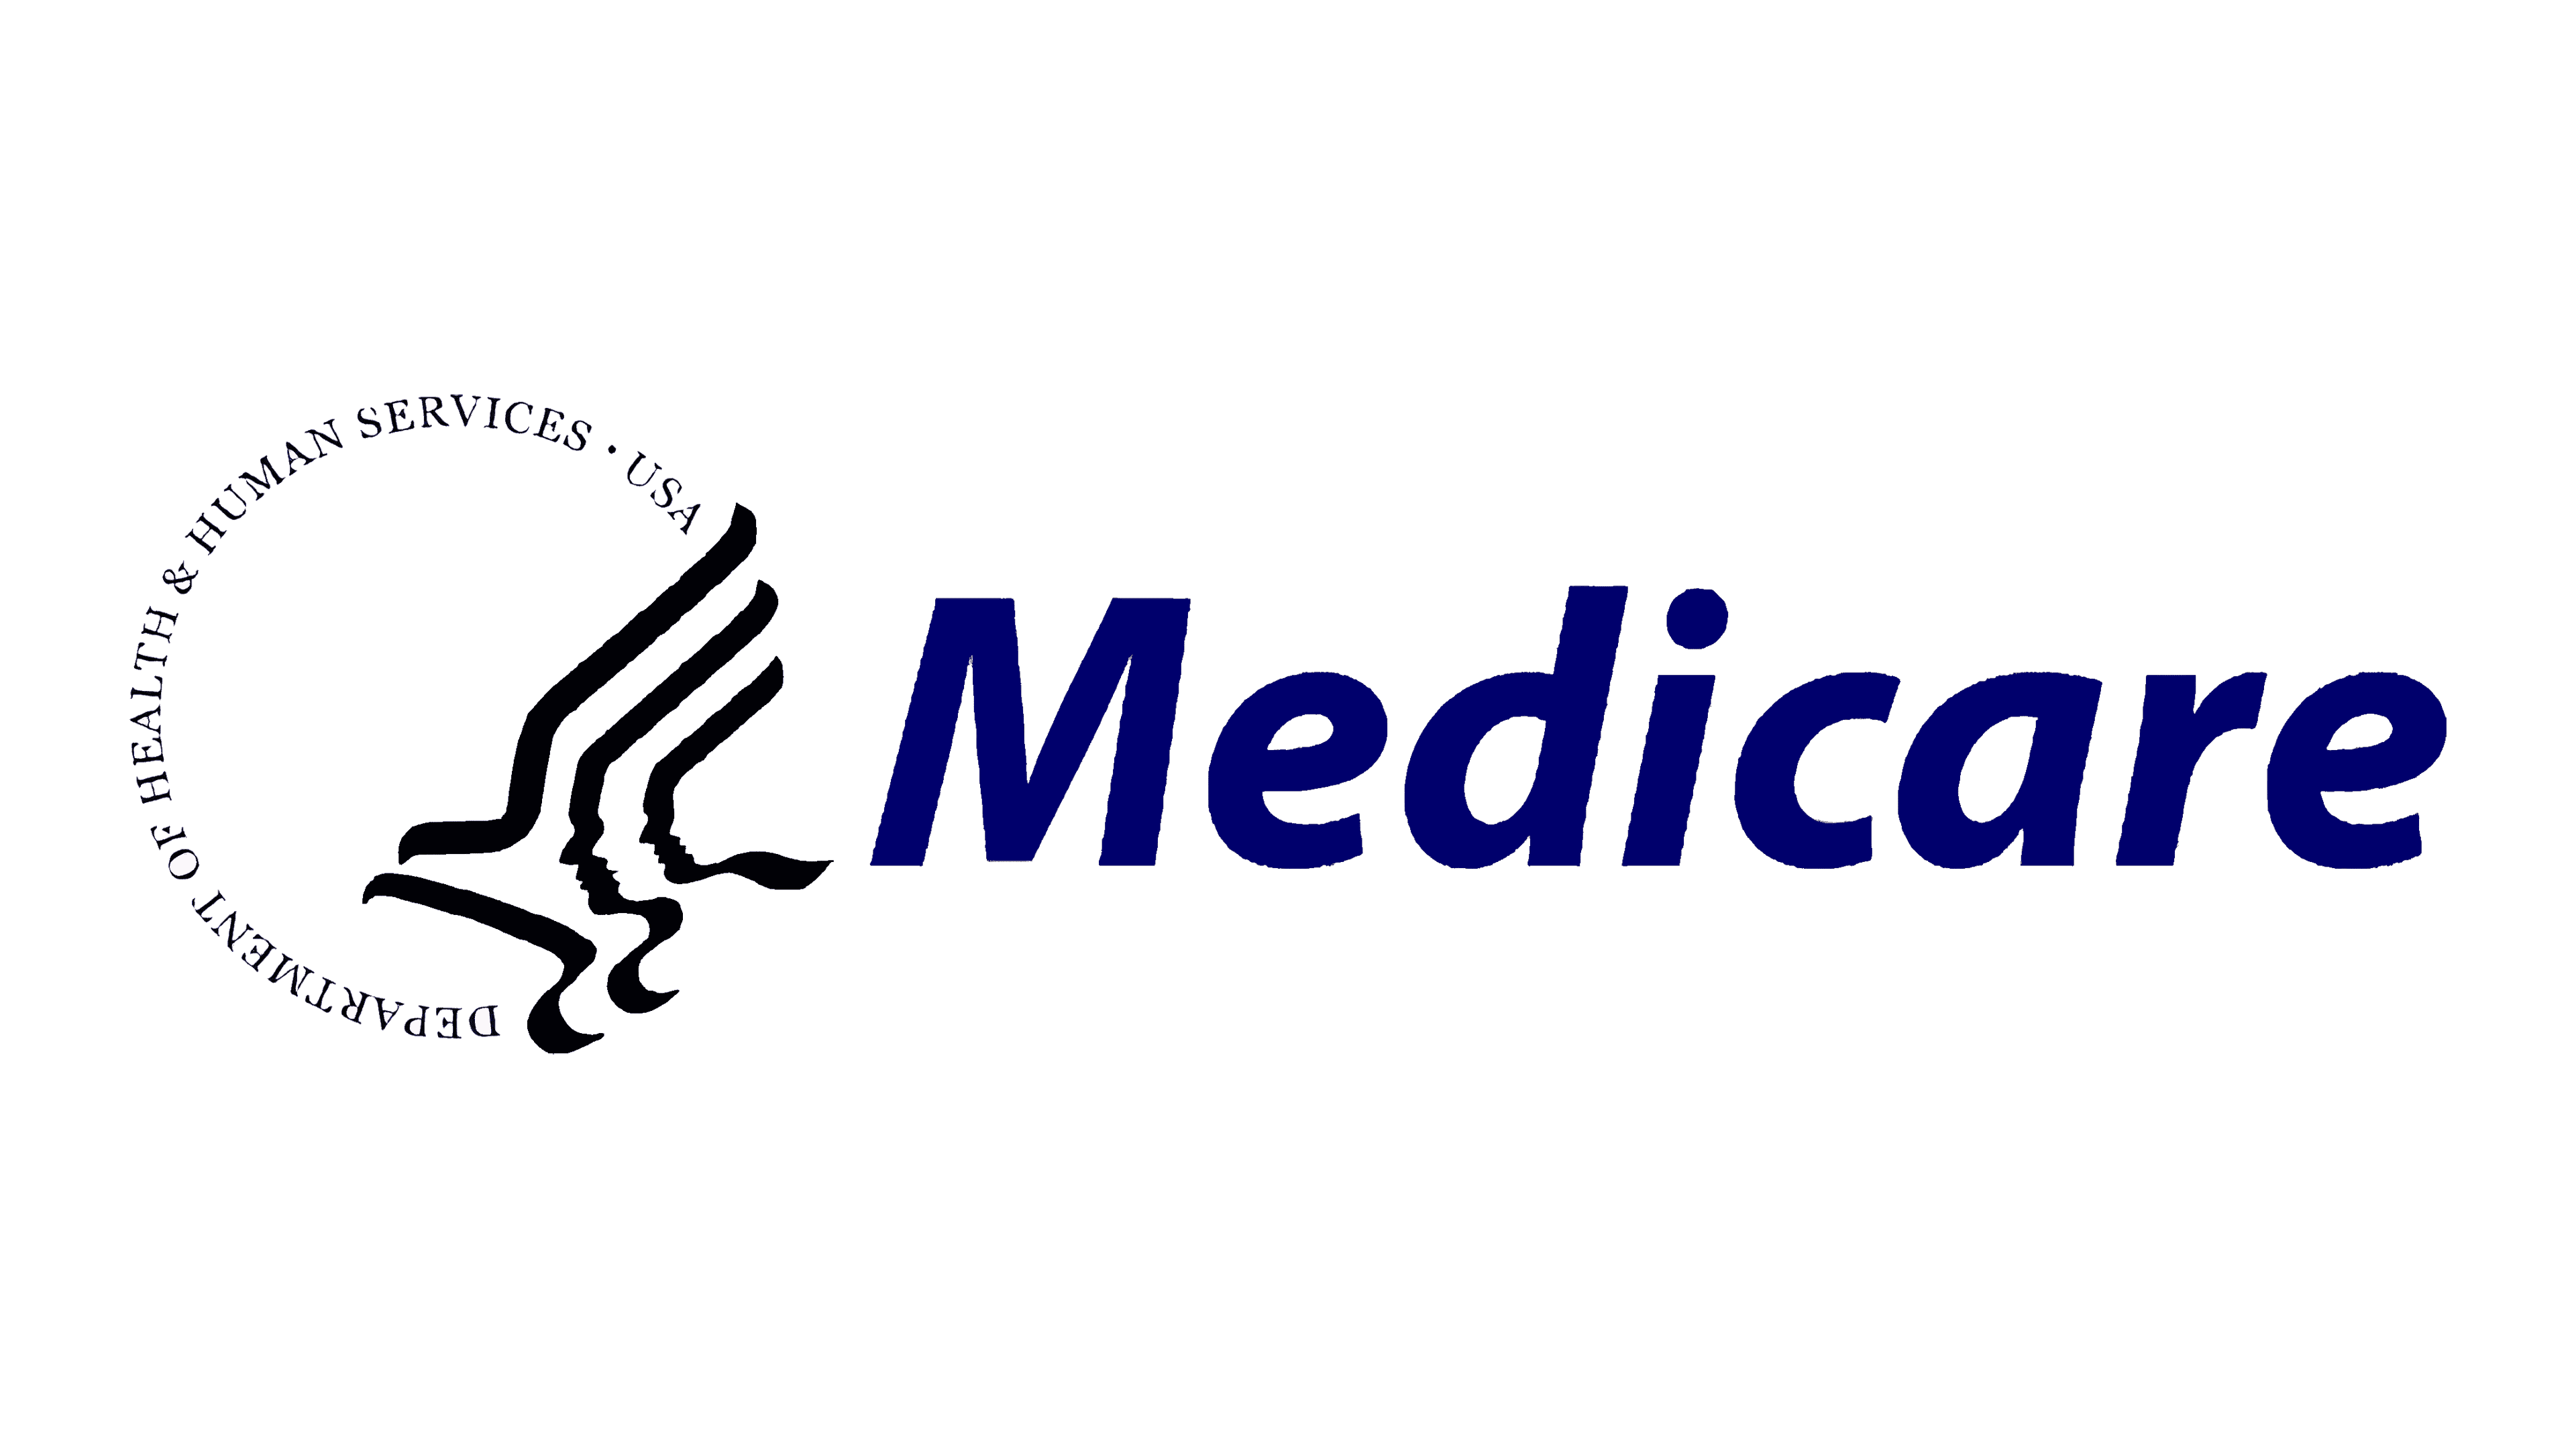 Medicare-Logo